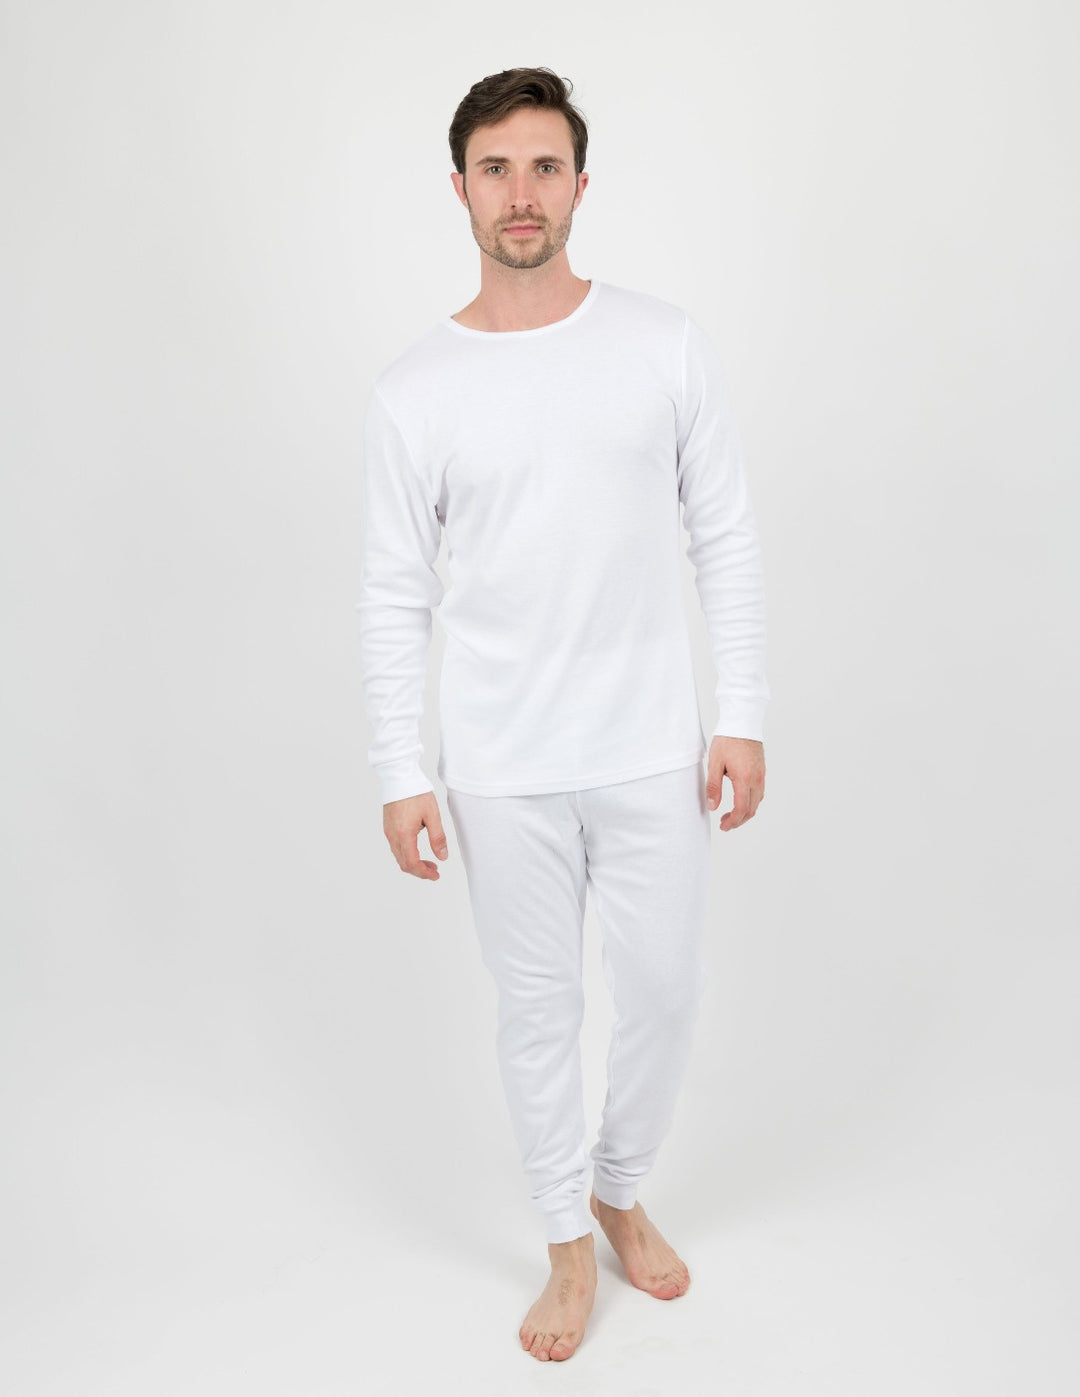 white solid color men's pajamas